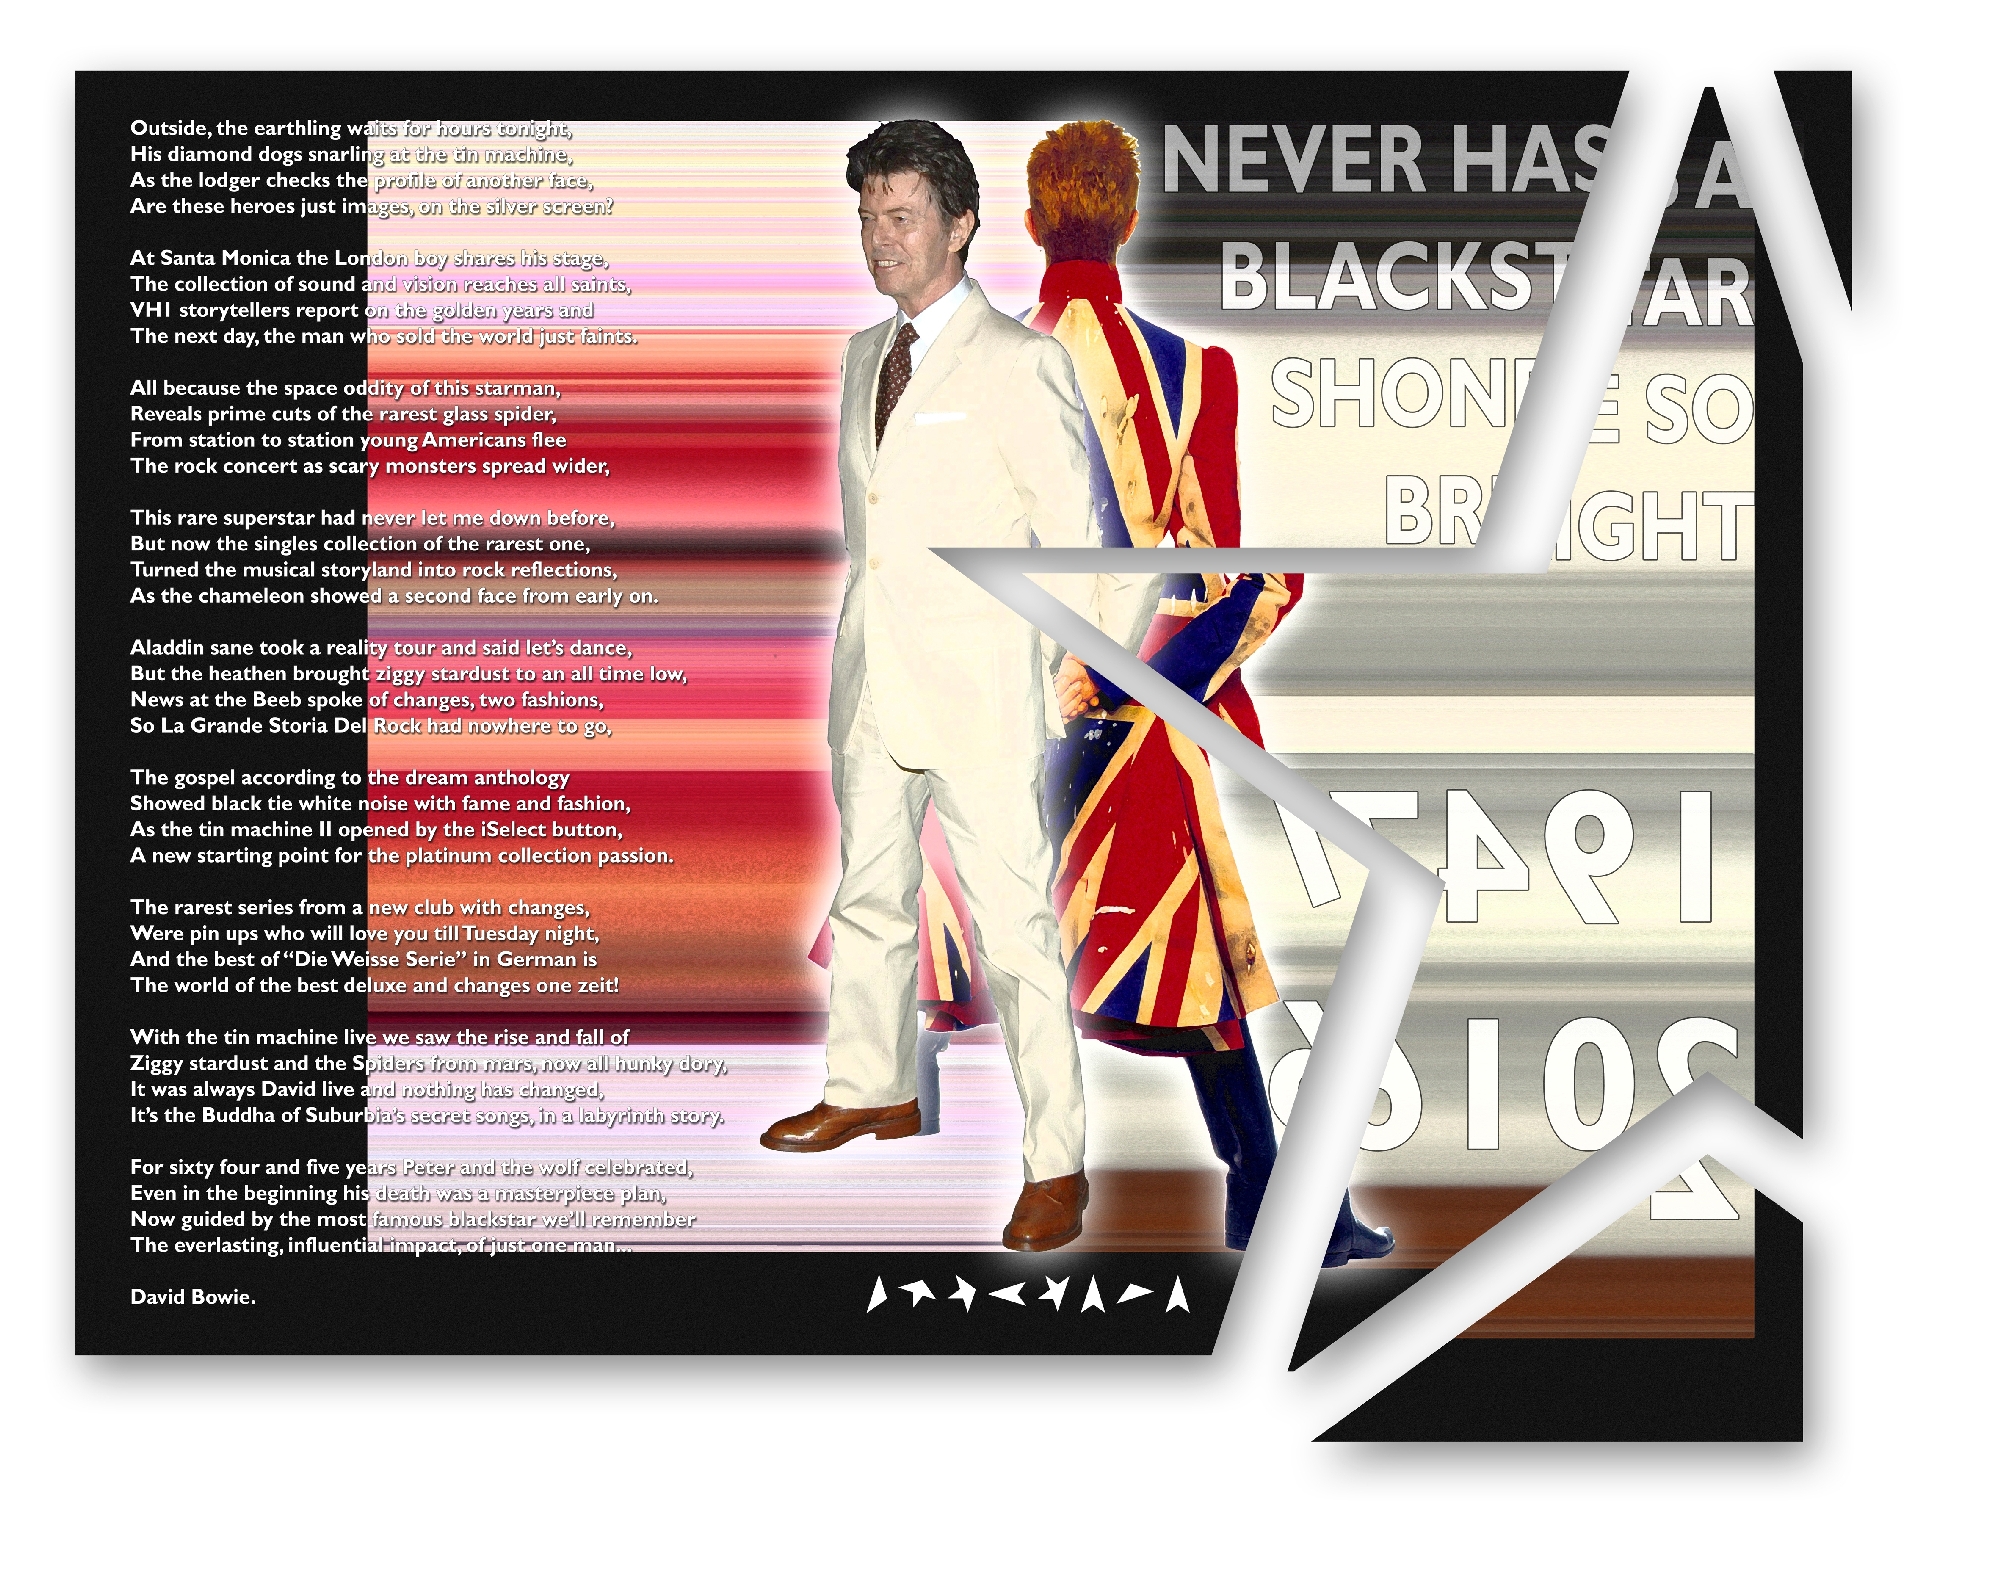 David Bowie Art Creation by Steve Stachini - Just A Word 80cm x 63cm